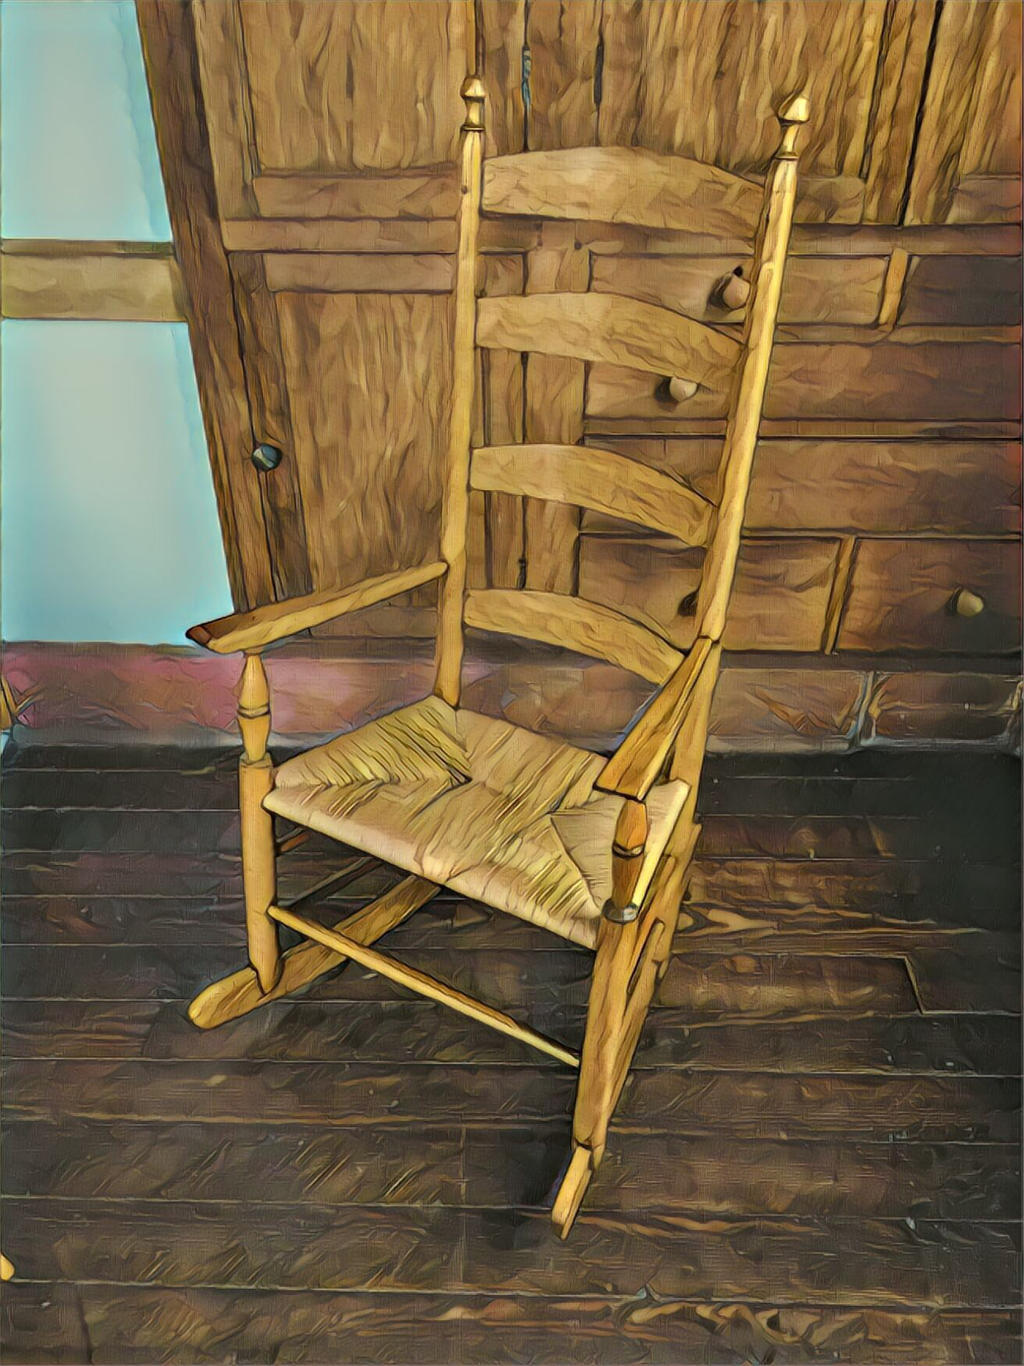 Shaker Rocking Chair By Legacyandlunacy On Deviantart